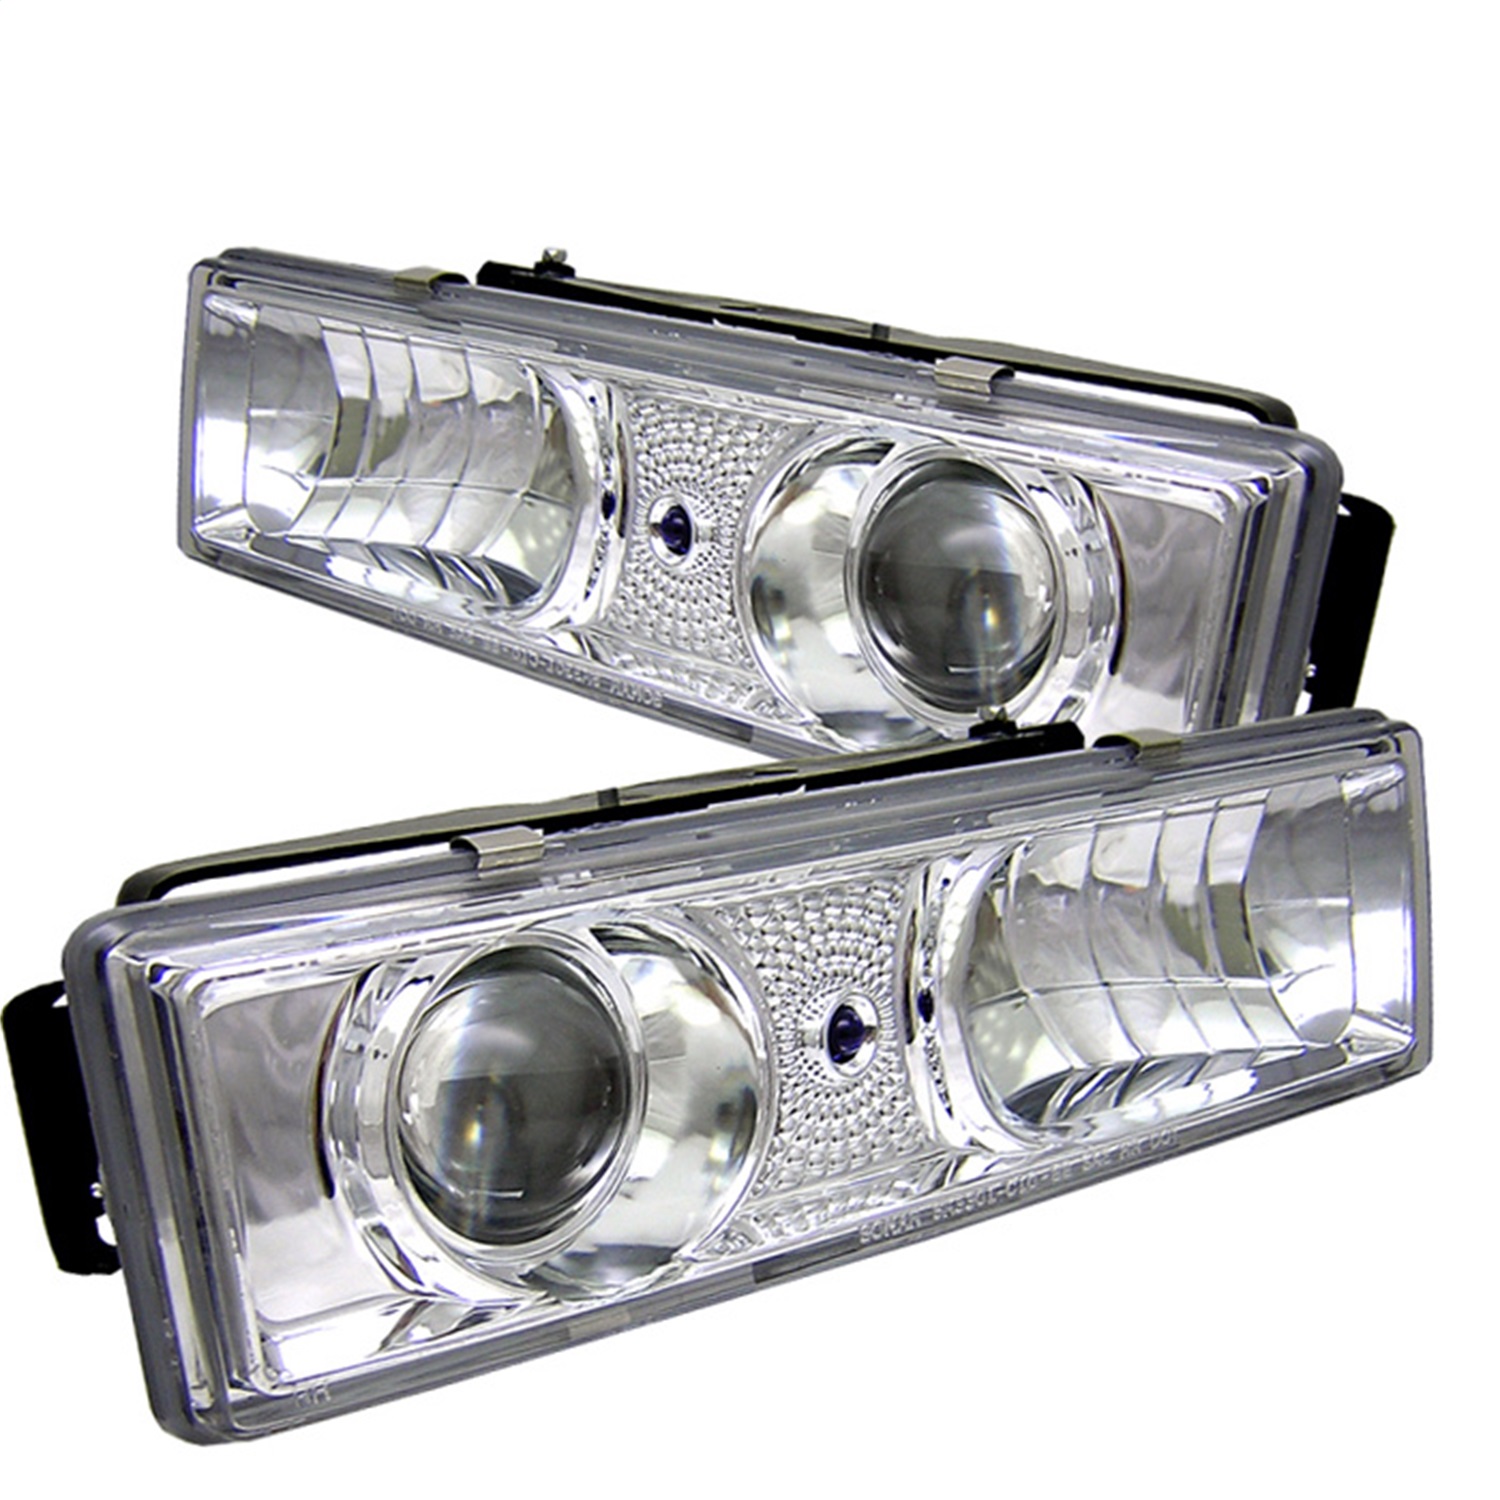 Spyder Auto 5009296 Projector Headlights